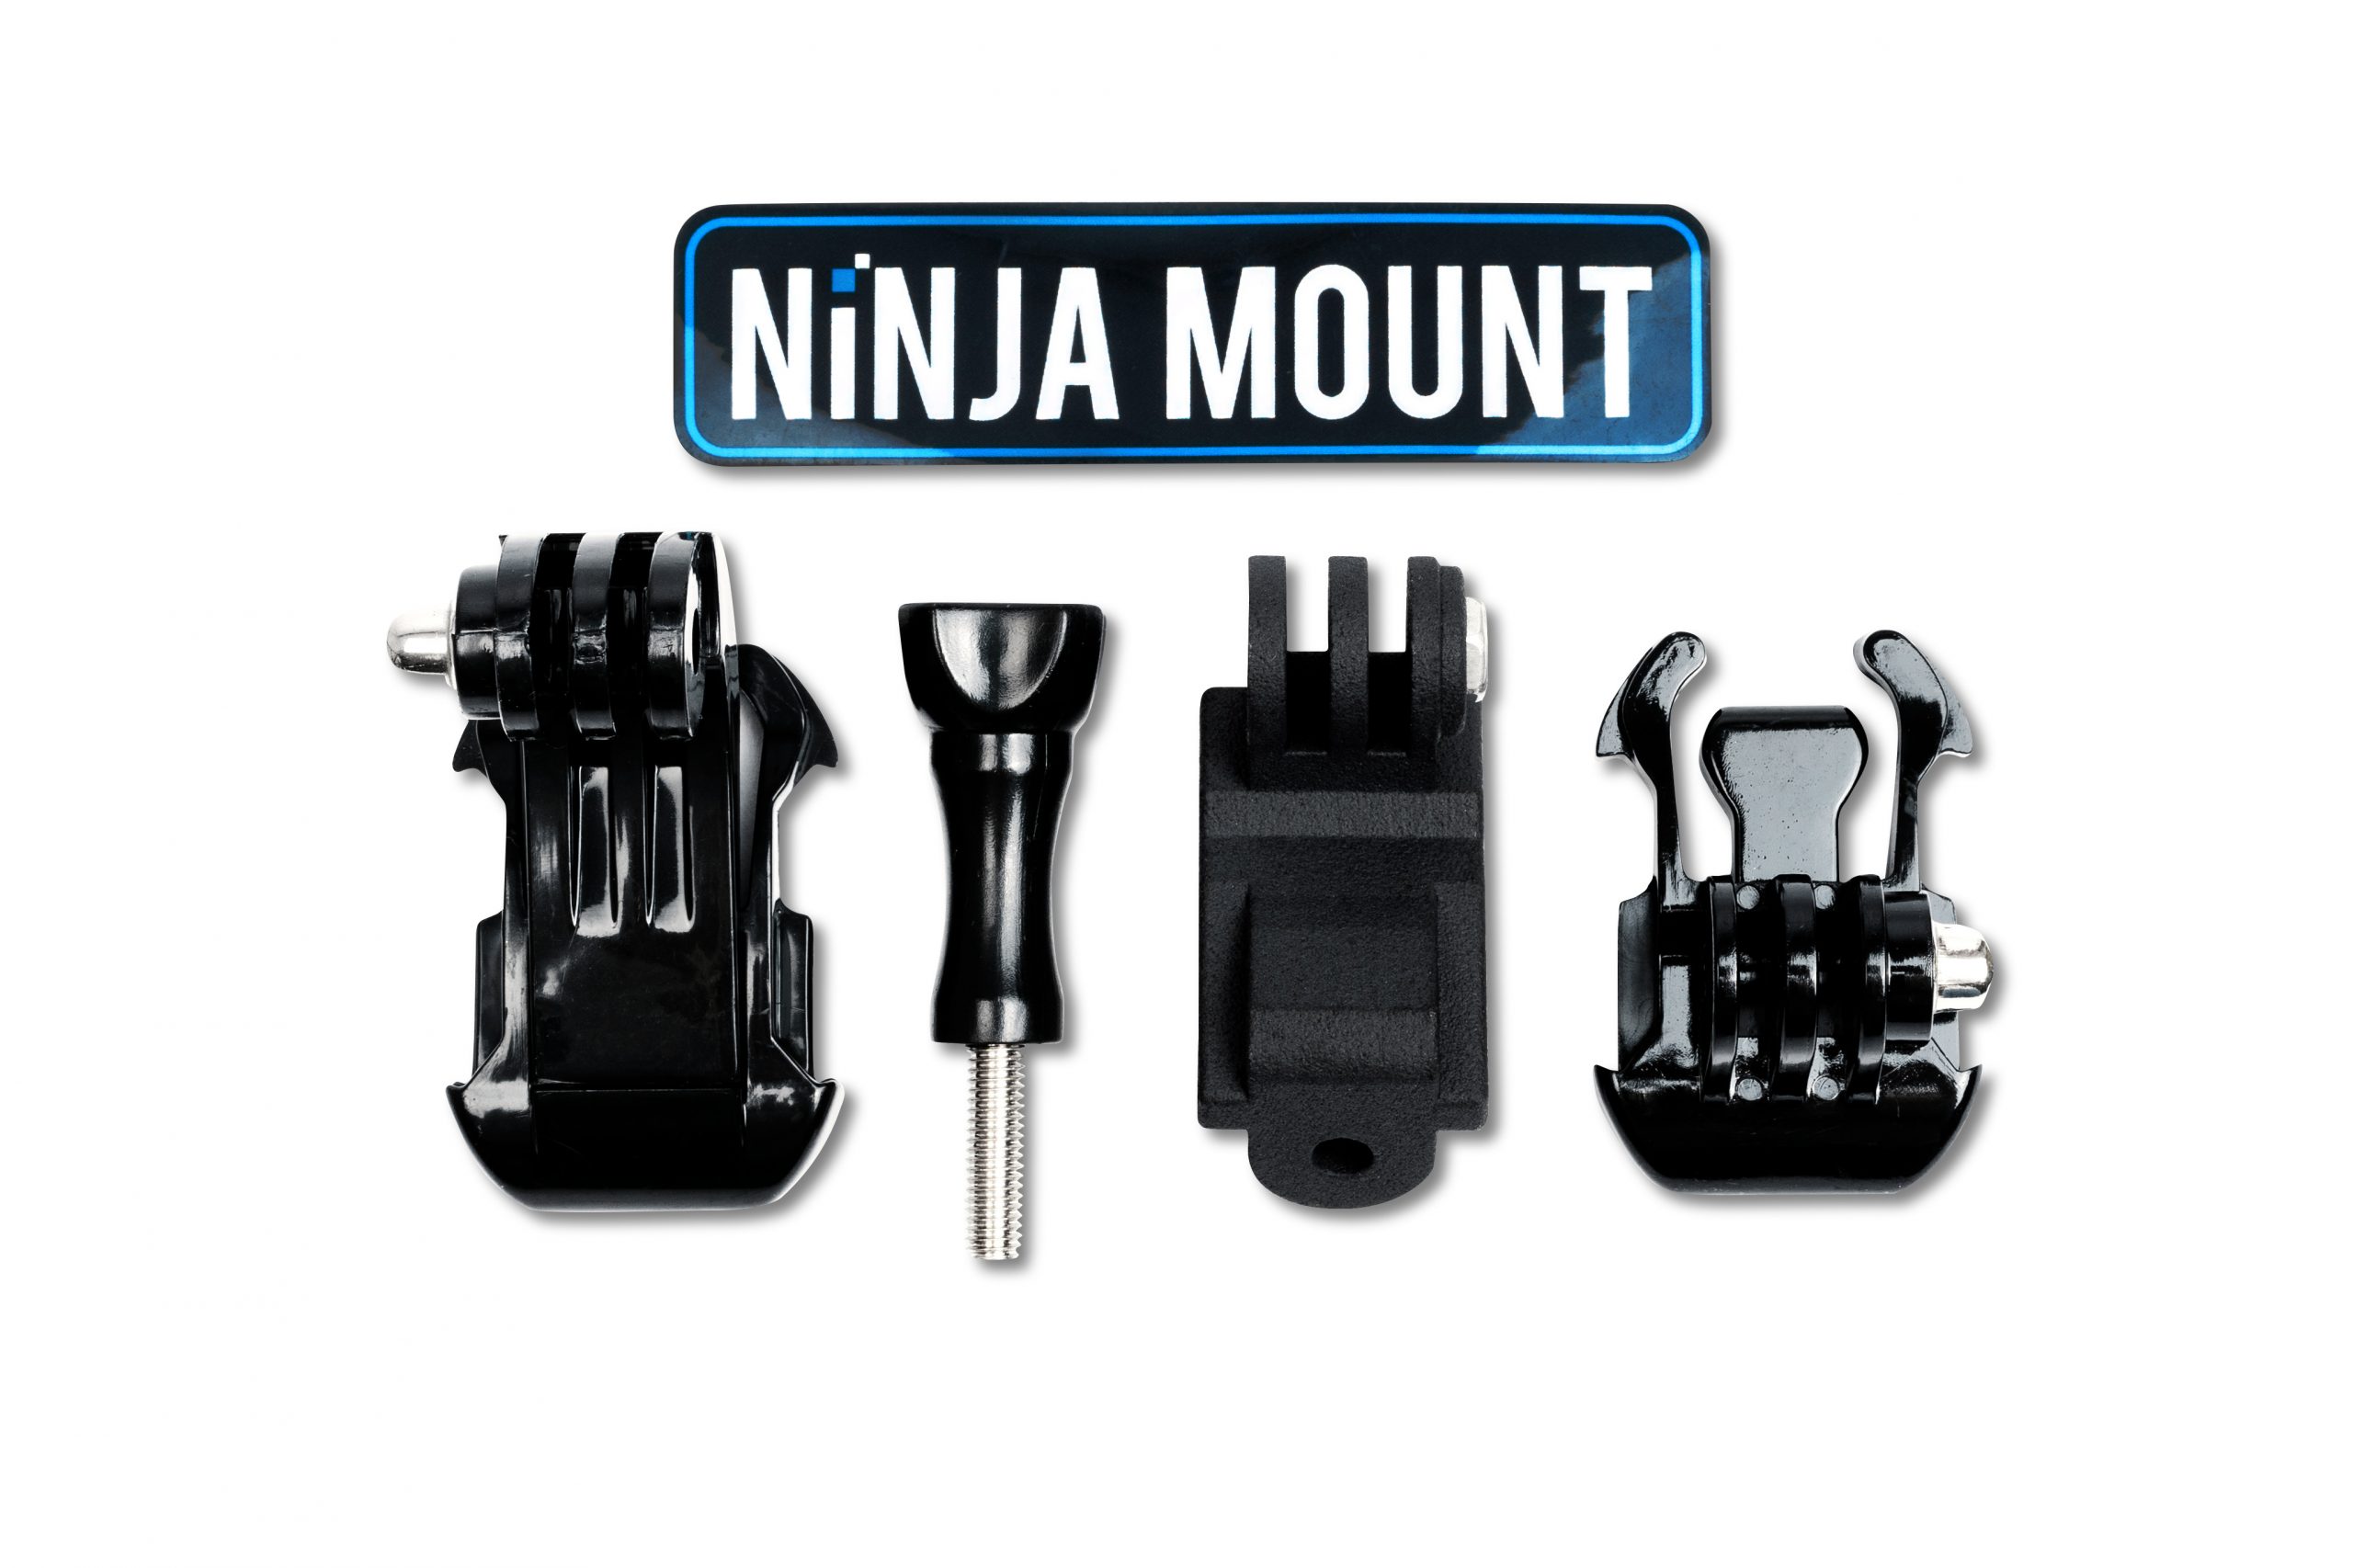 Ninja Mount StoryAdapter